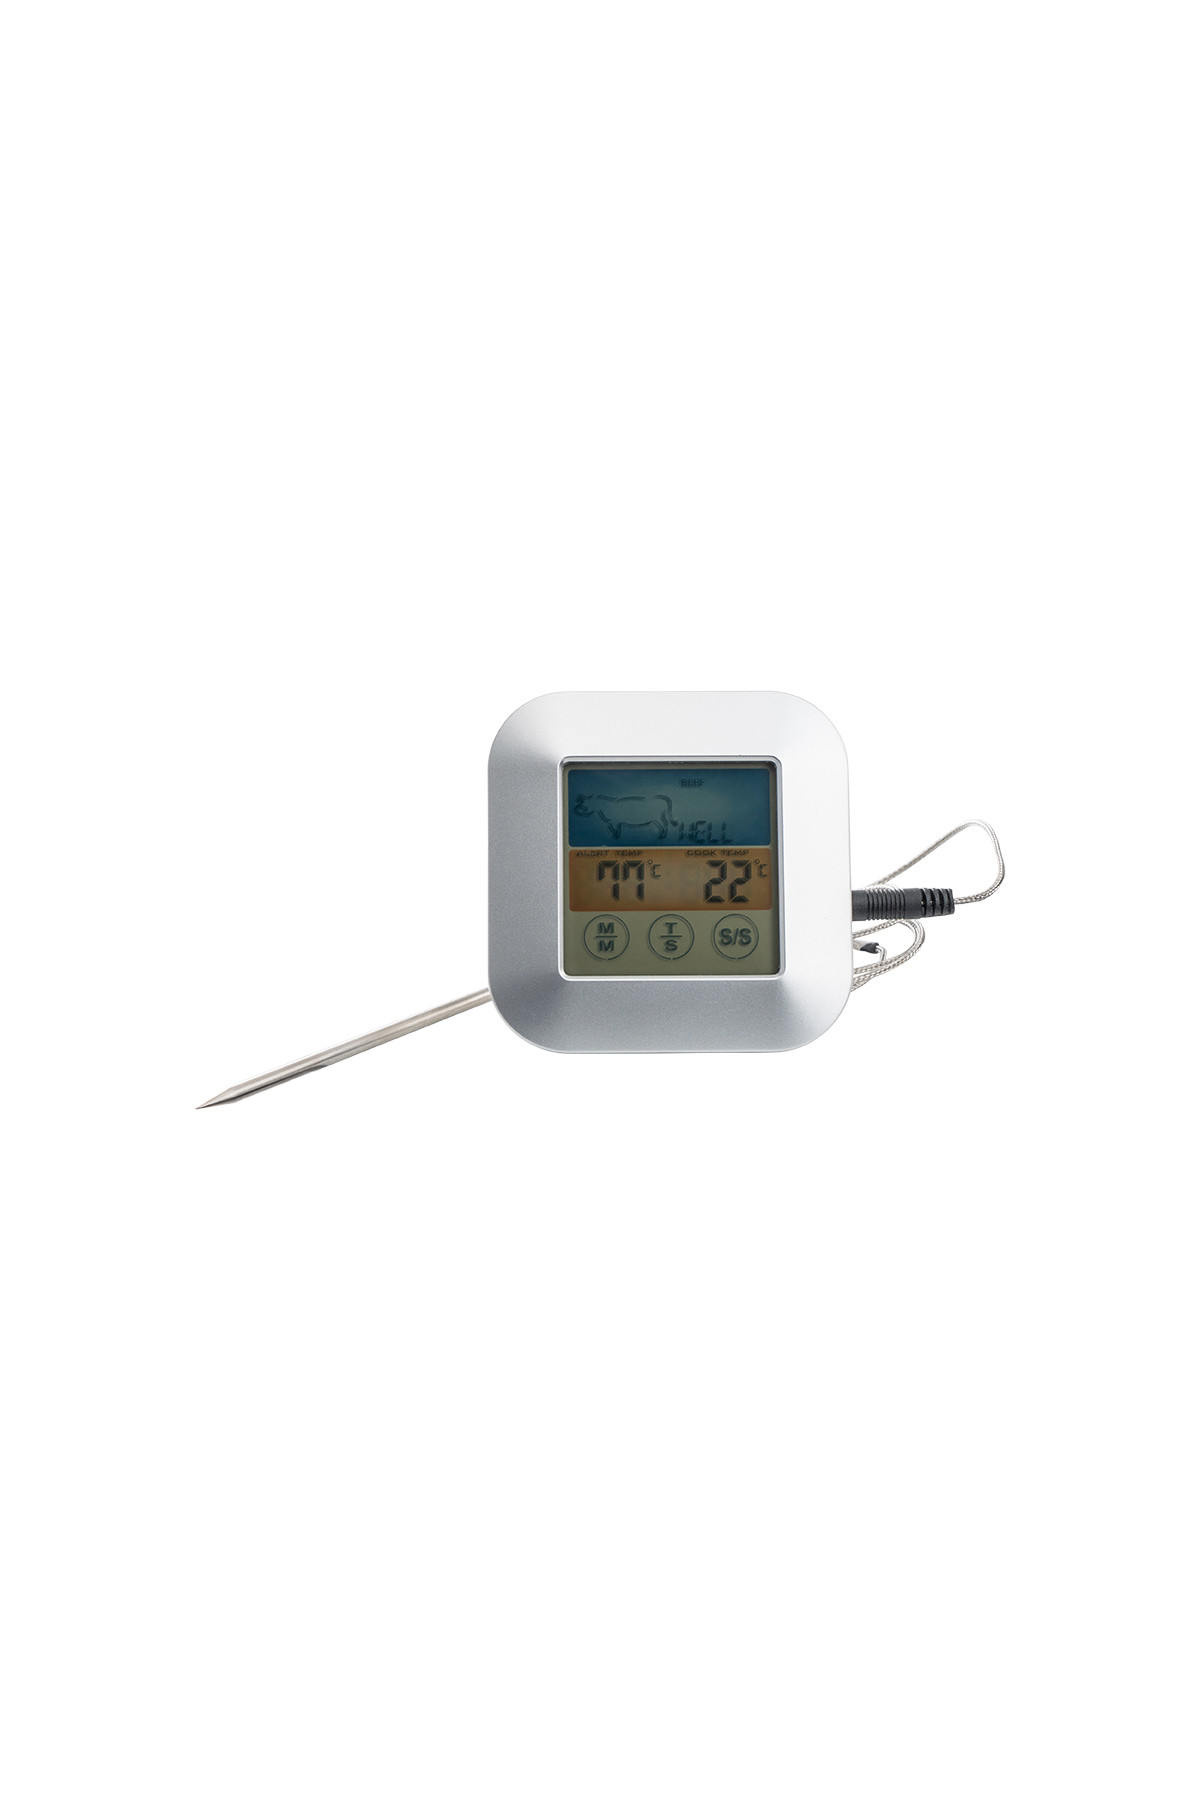 https://media.heirol.fi/67933/1200/digital-cooking-thermometer-0-250-c-lcd-touchscreen_.jpg